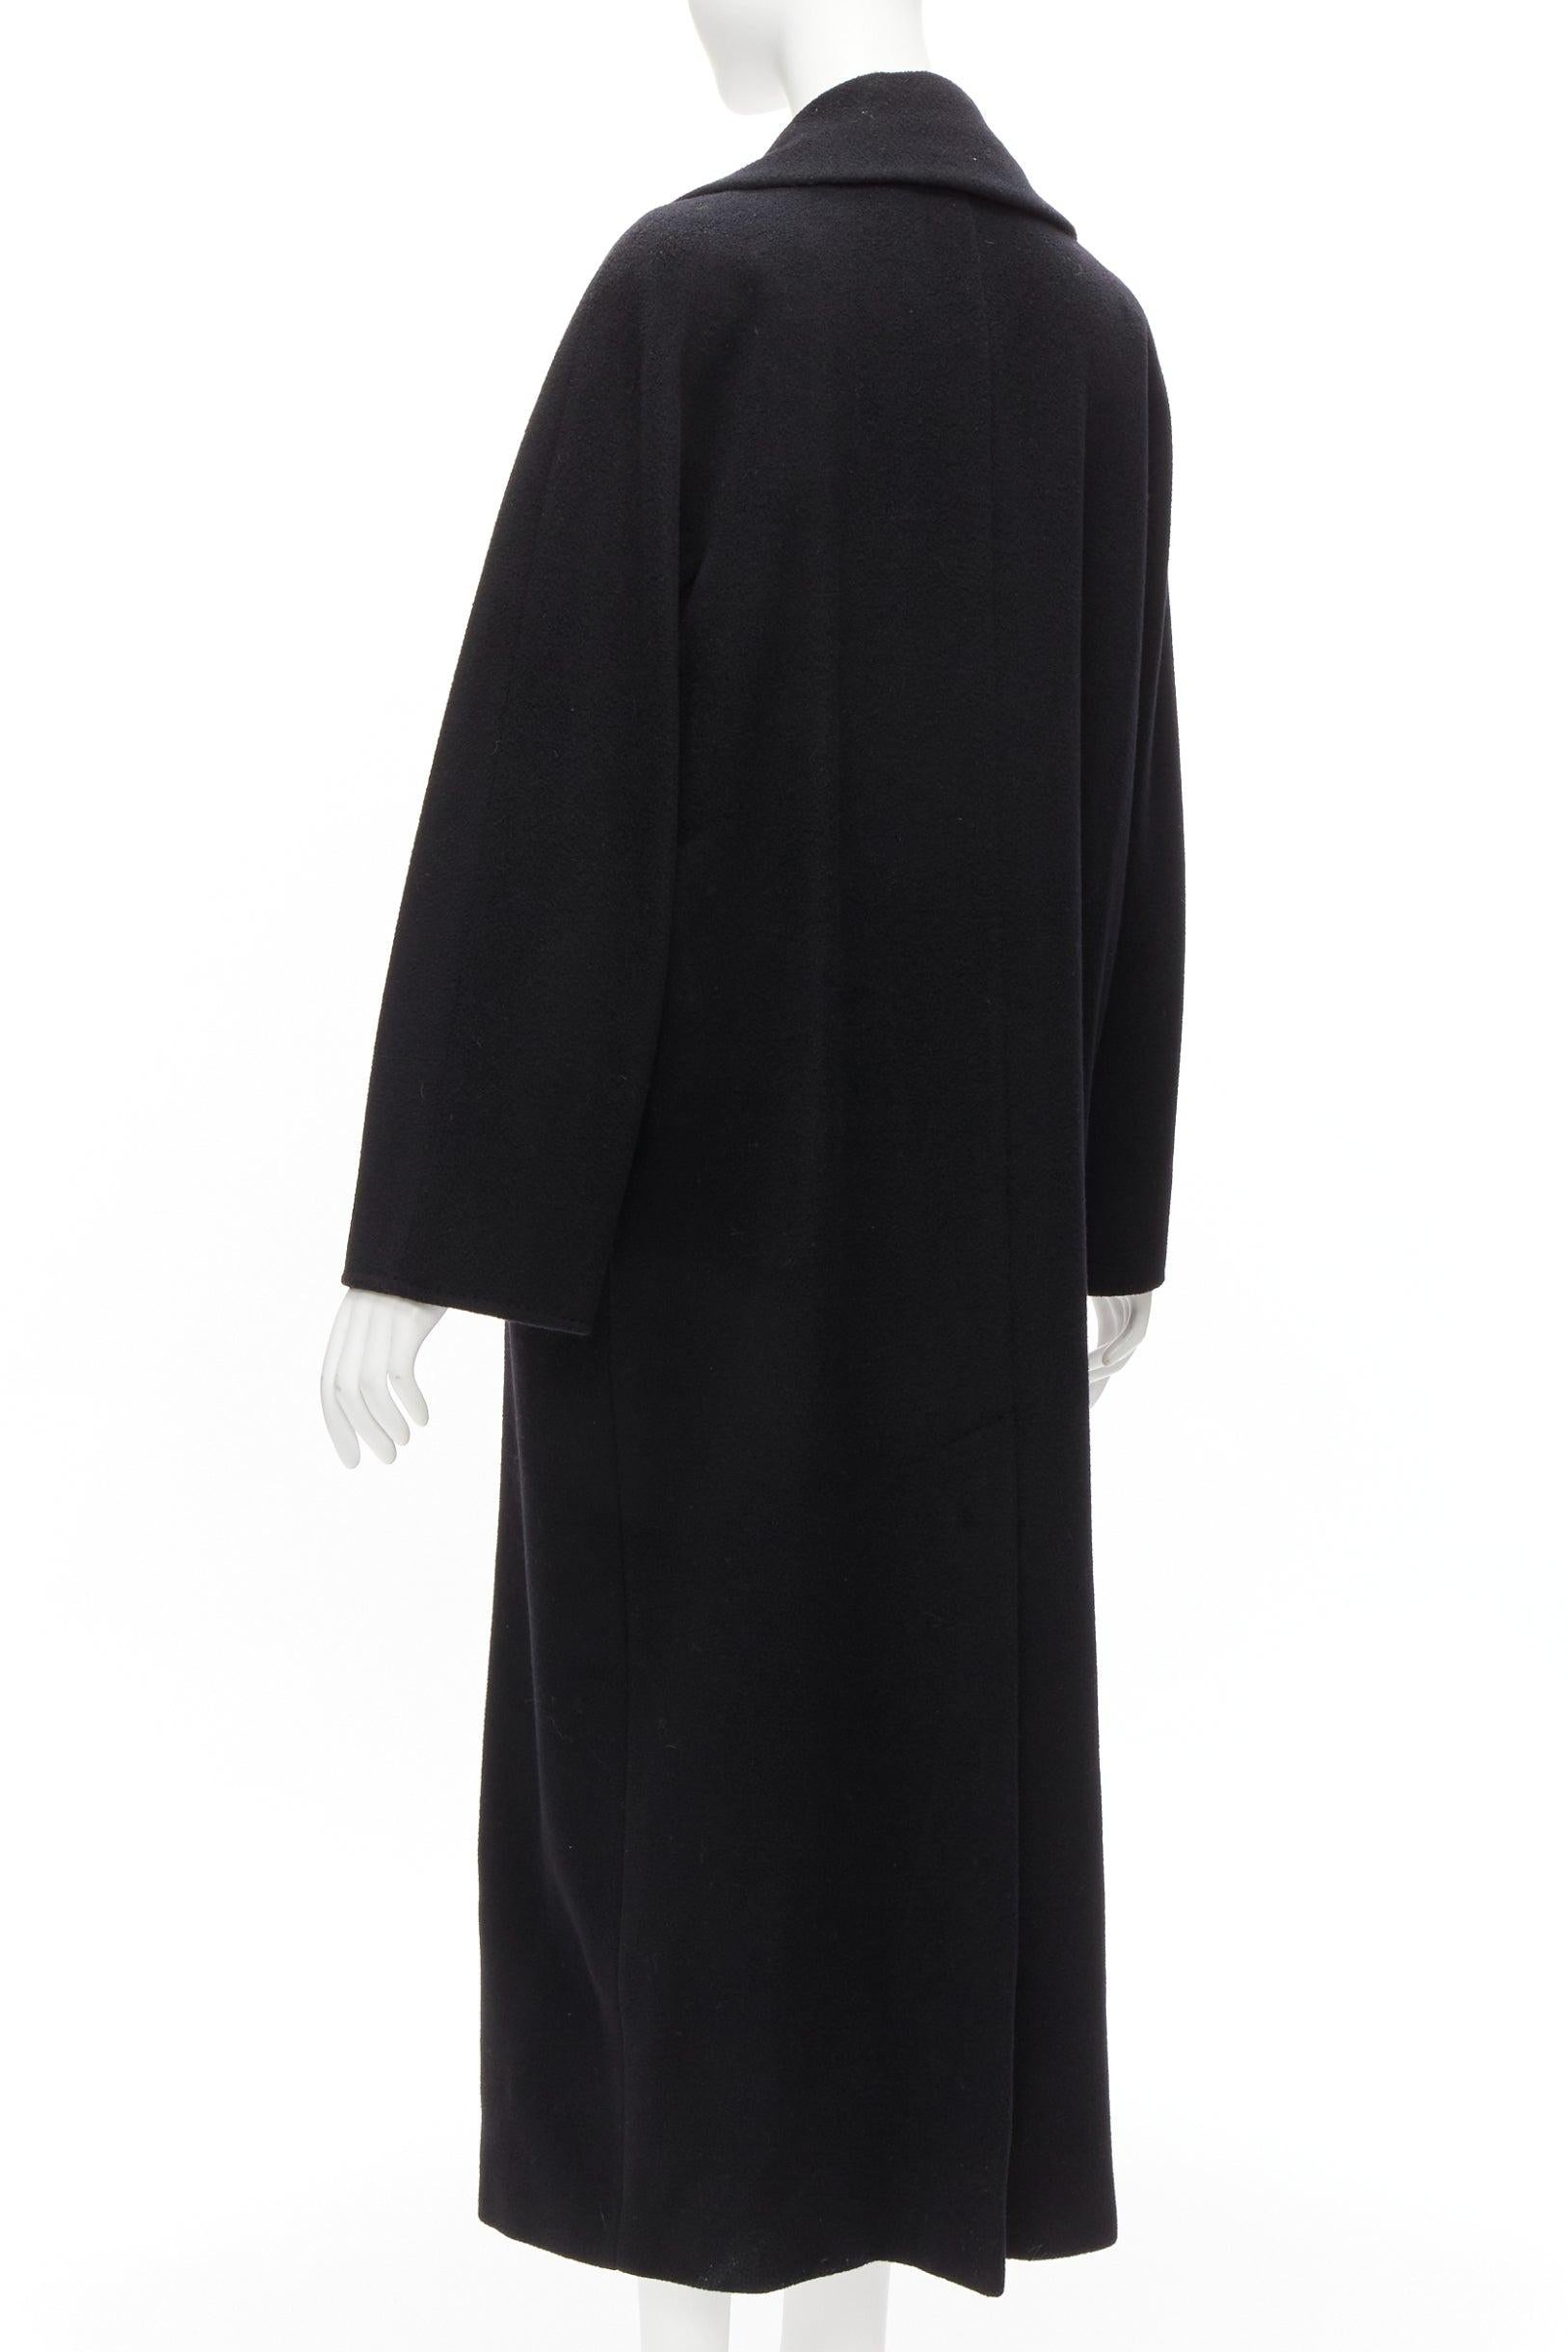 MAX MARA black virgin wool cashmere wide collar long coat IT42 M For Sale 1